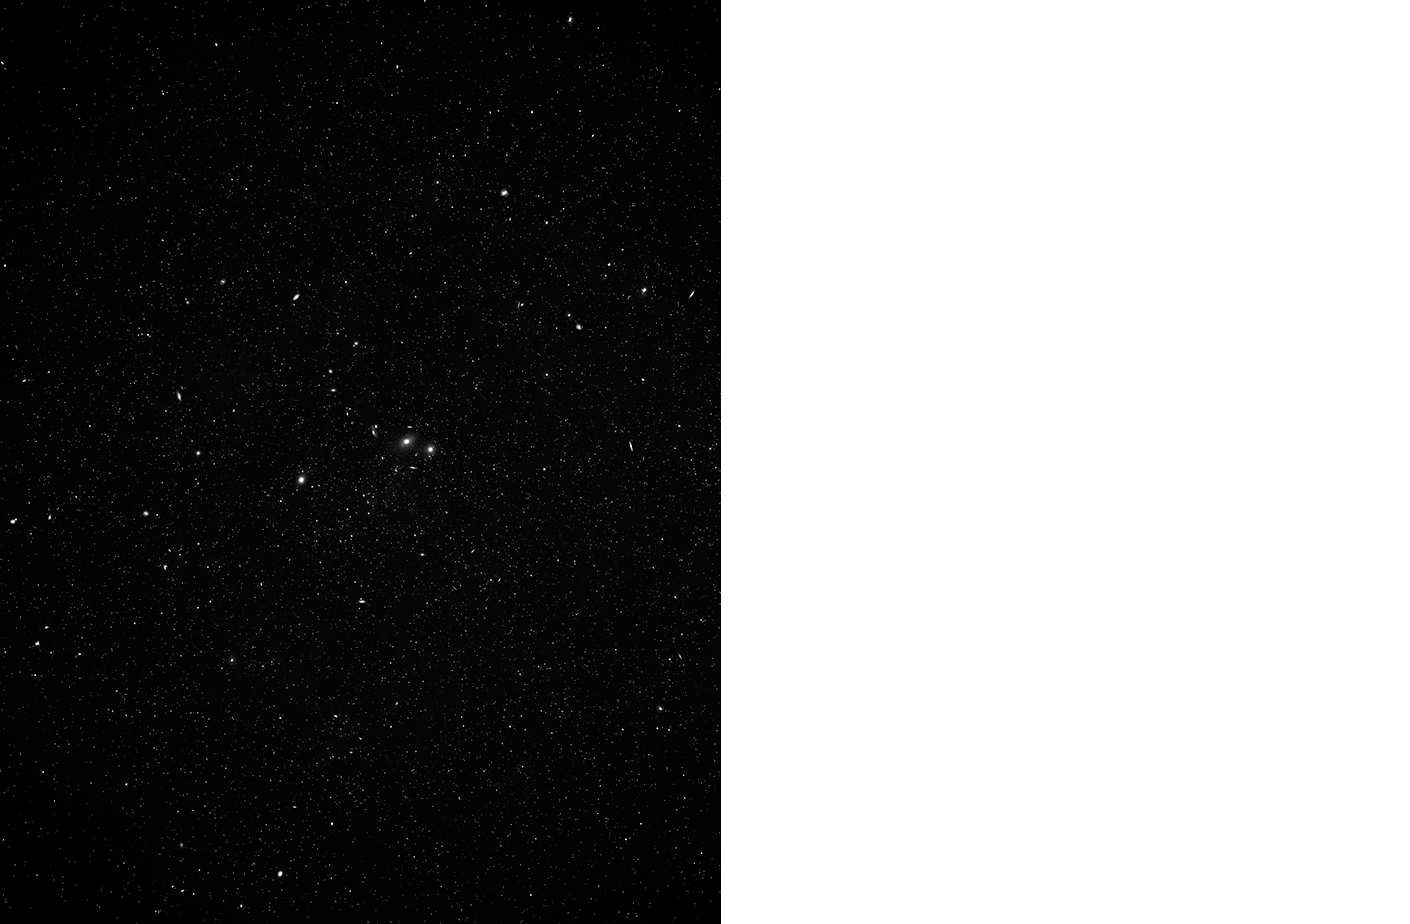  7048-03 Skies - Coma Cluster  Platinum Palladium Print 17.17 x 22.00 inch Image Size 22.00 x 29.00 Paper Size 1 BAT / 1 PP / 12 EDP 